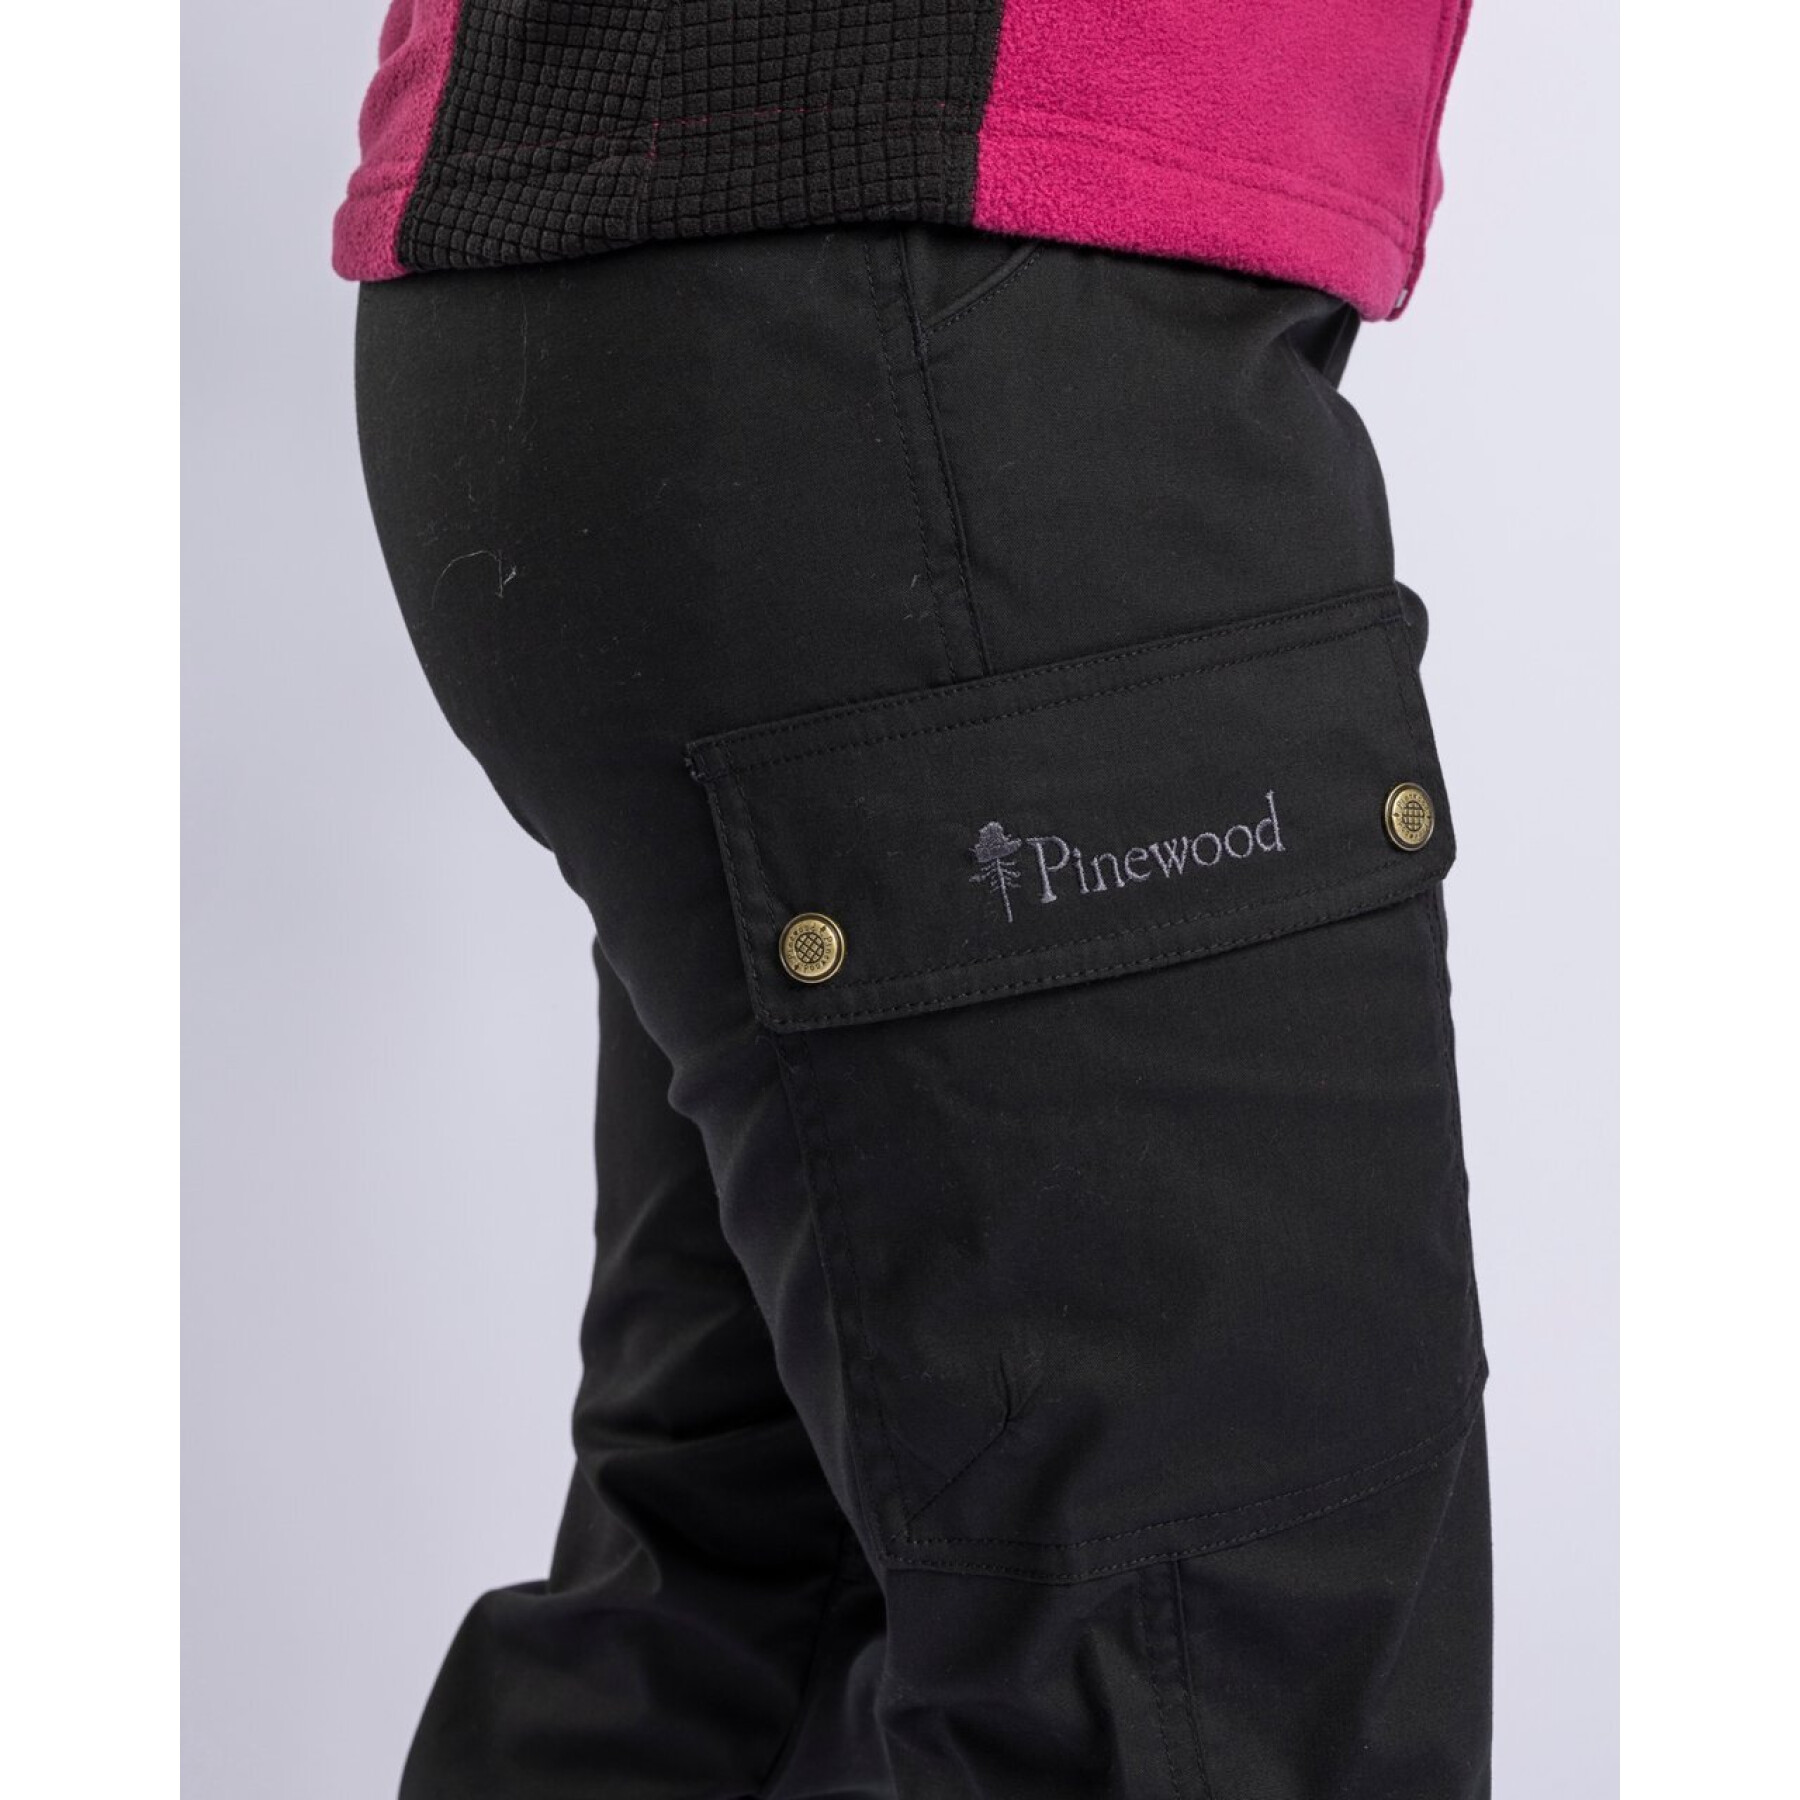 Women's pants Pinewood Finnveden Classic